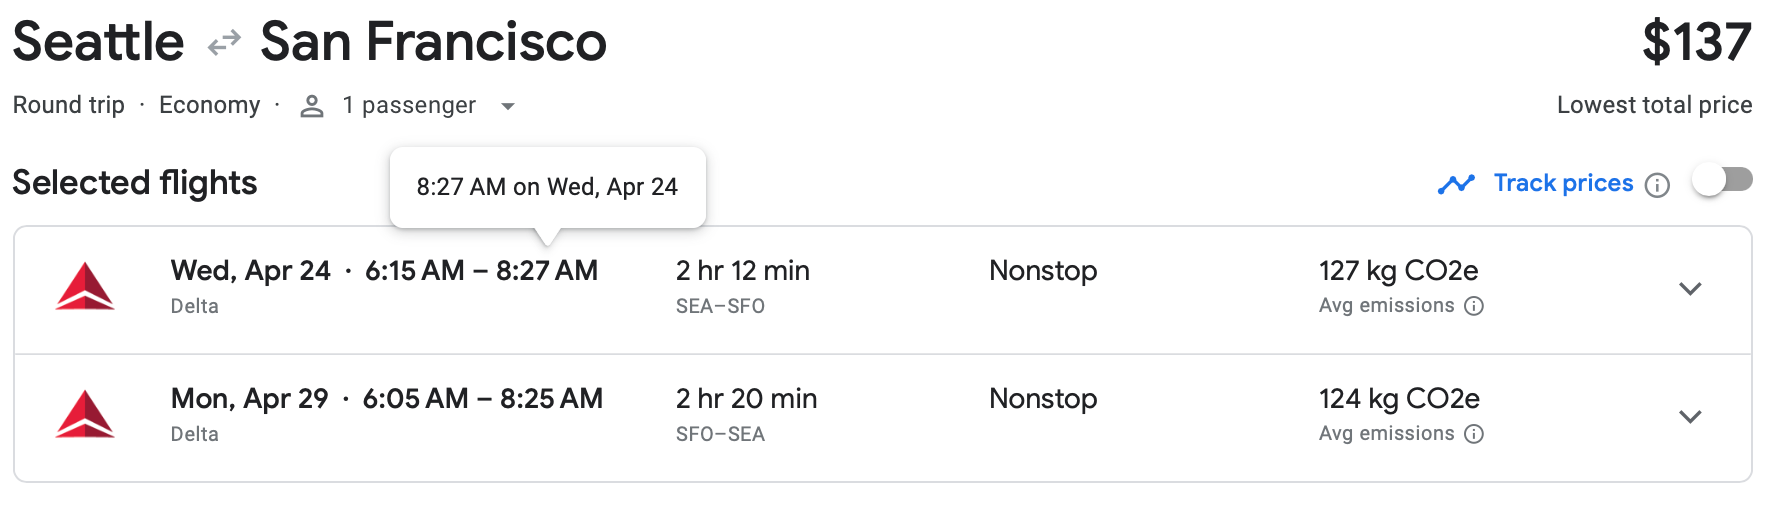 Seattle to San Francisco flight